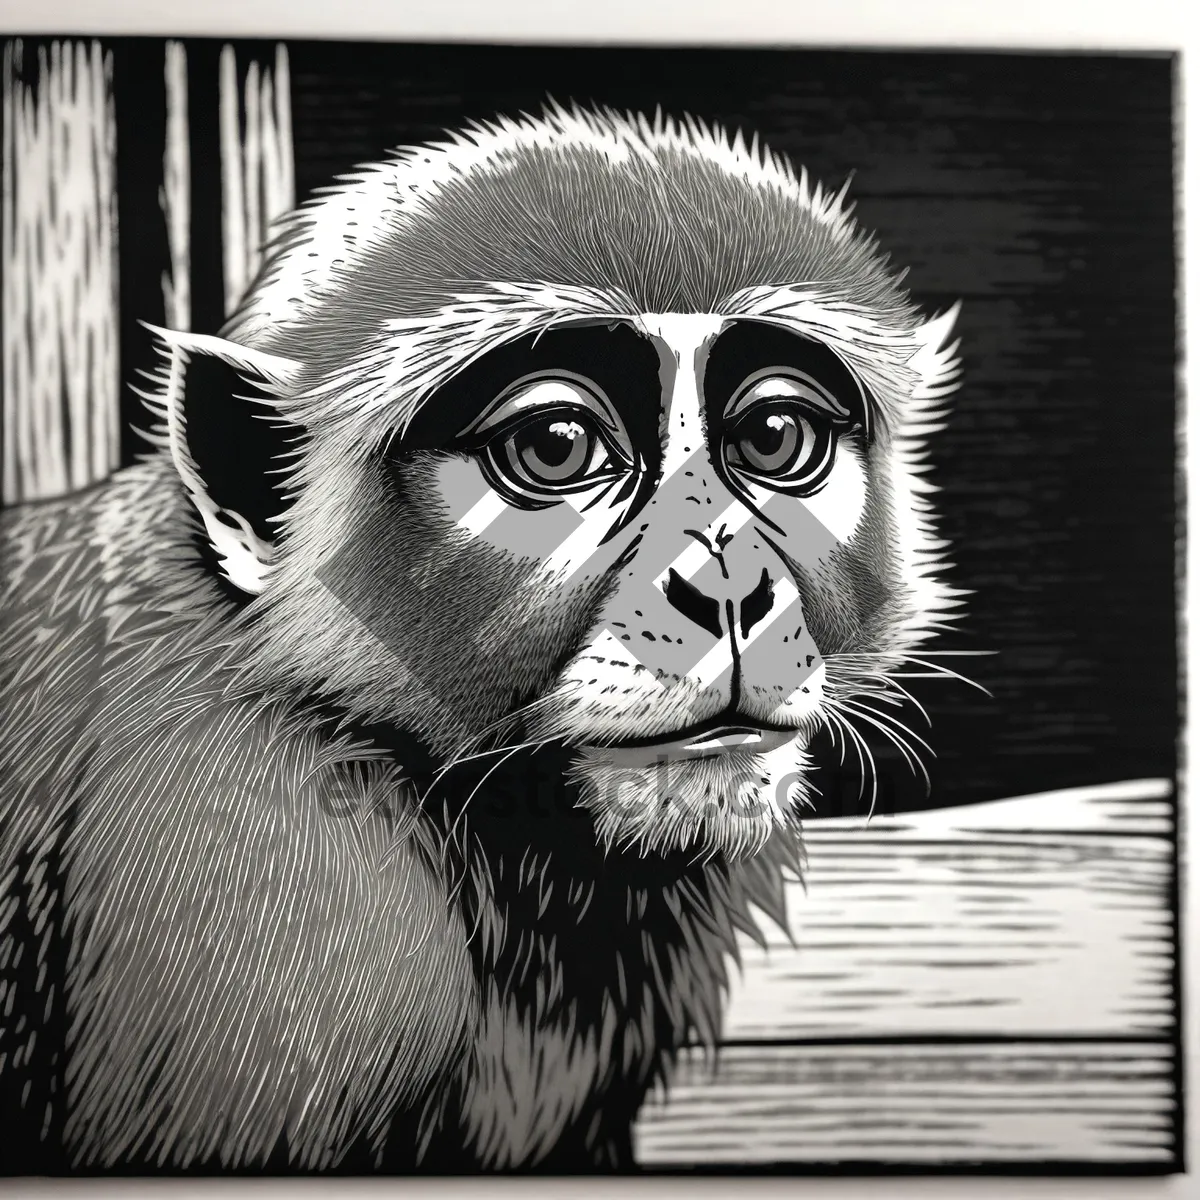 Picture of Wild Primate Portrait: Intense Eyes of a Feline-Like Ape